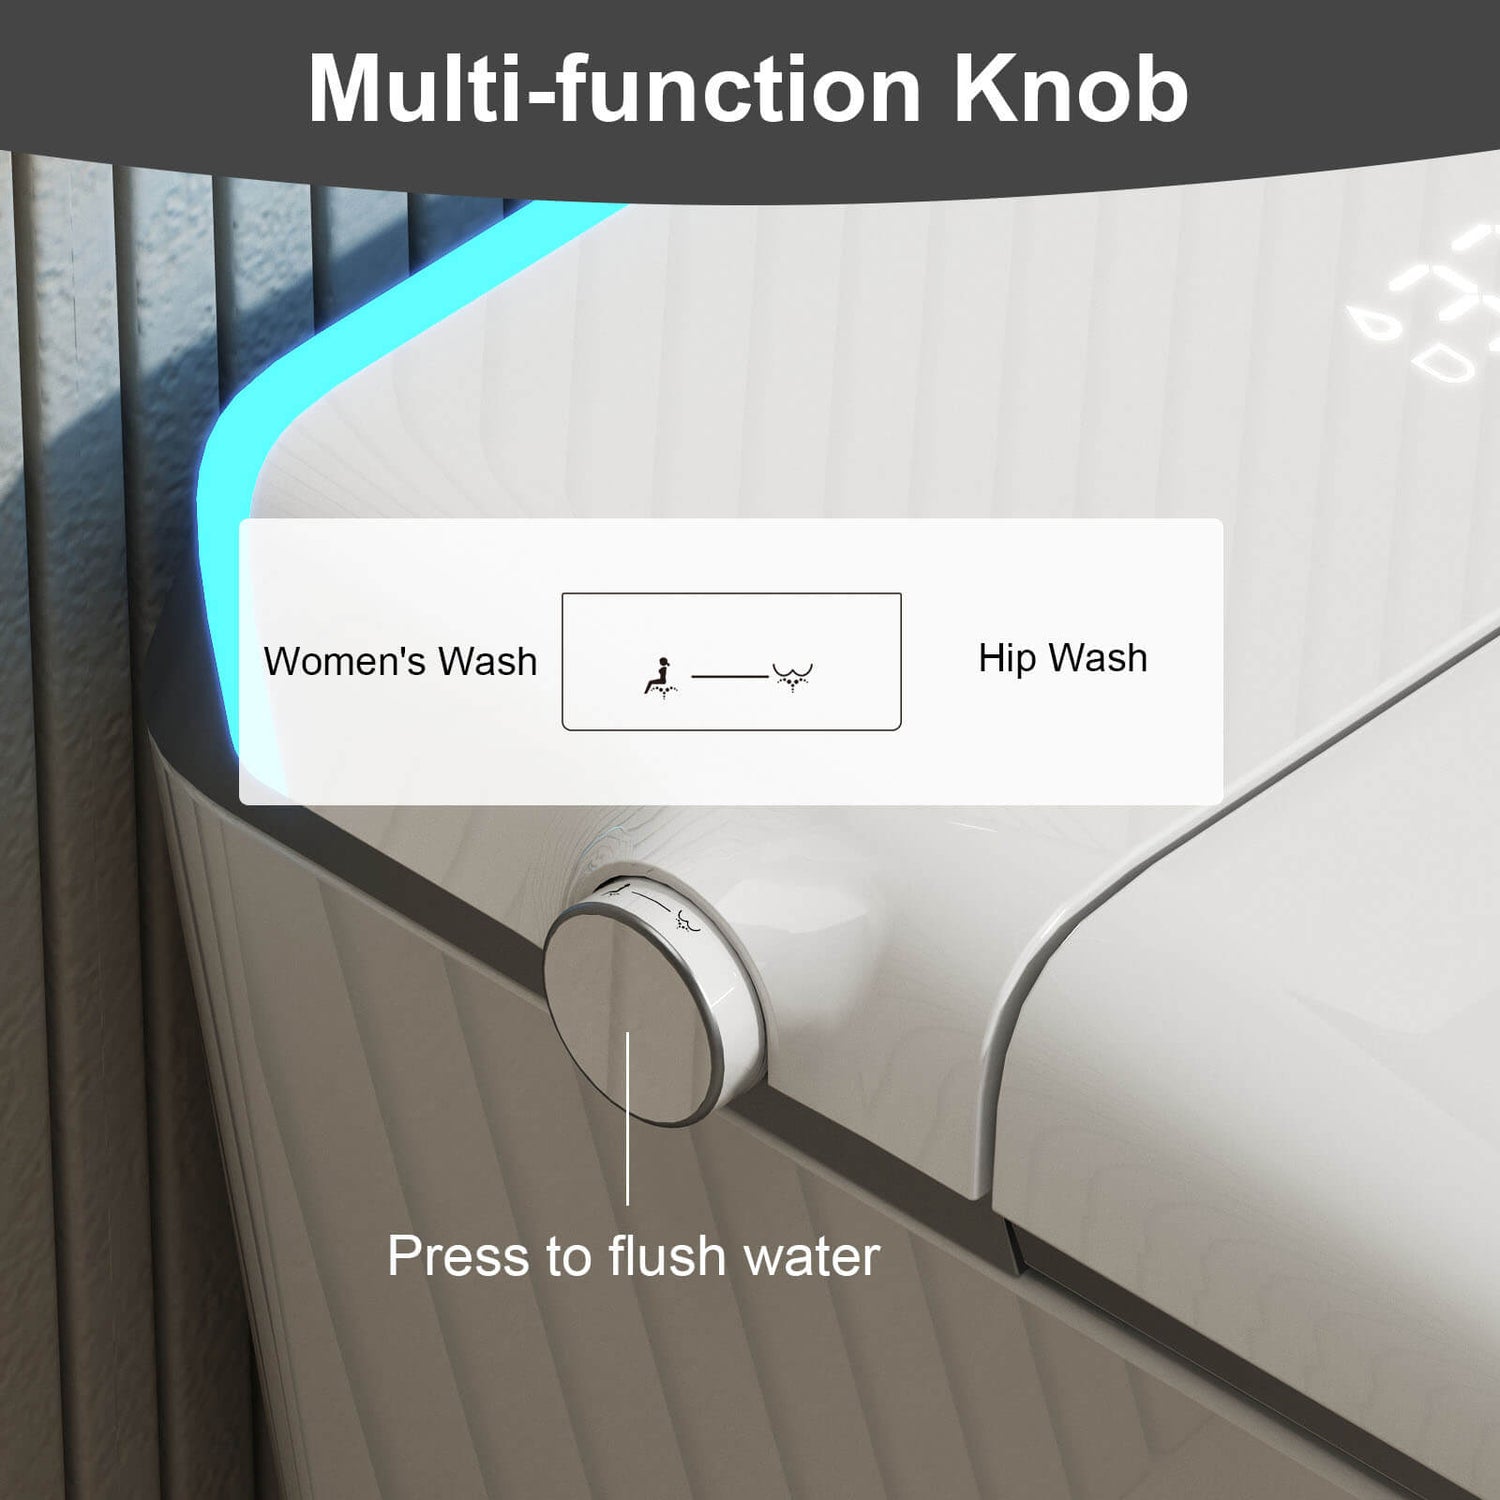 Function adjustment instructions for modern silent flushing smart toilet